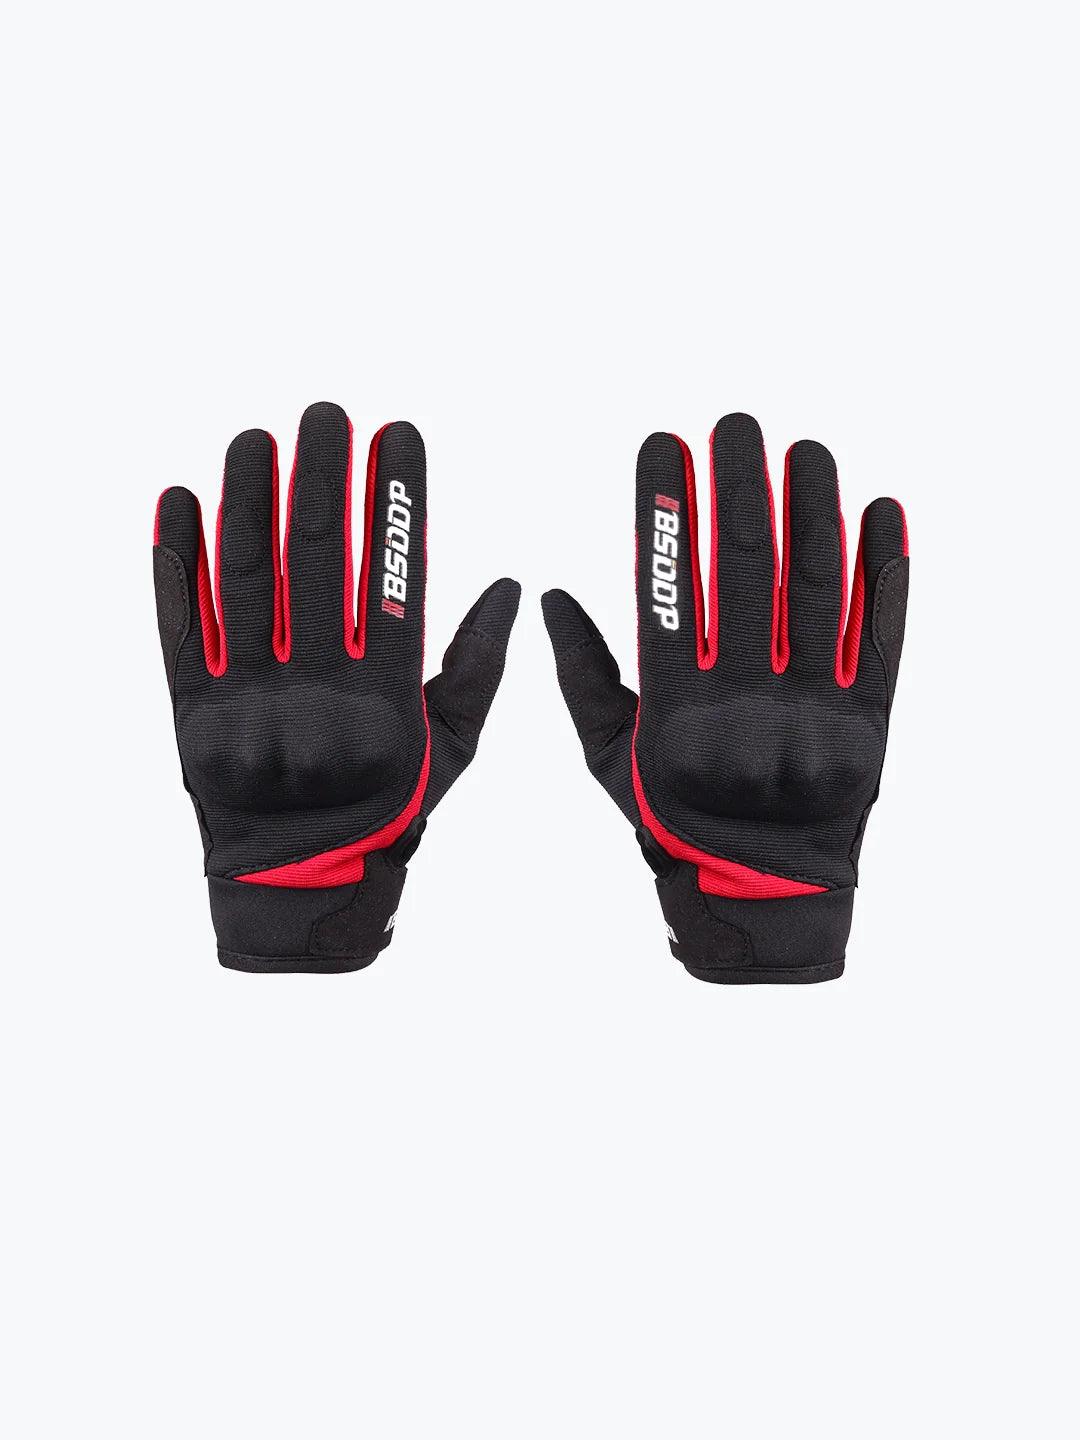 BSDDP Gloves A0143 Black Red - Moto Modz